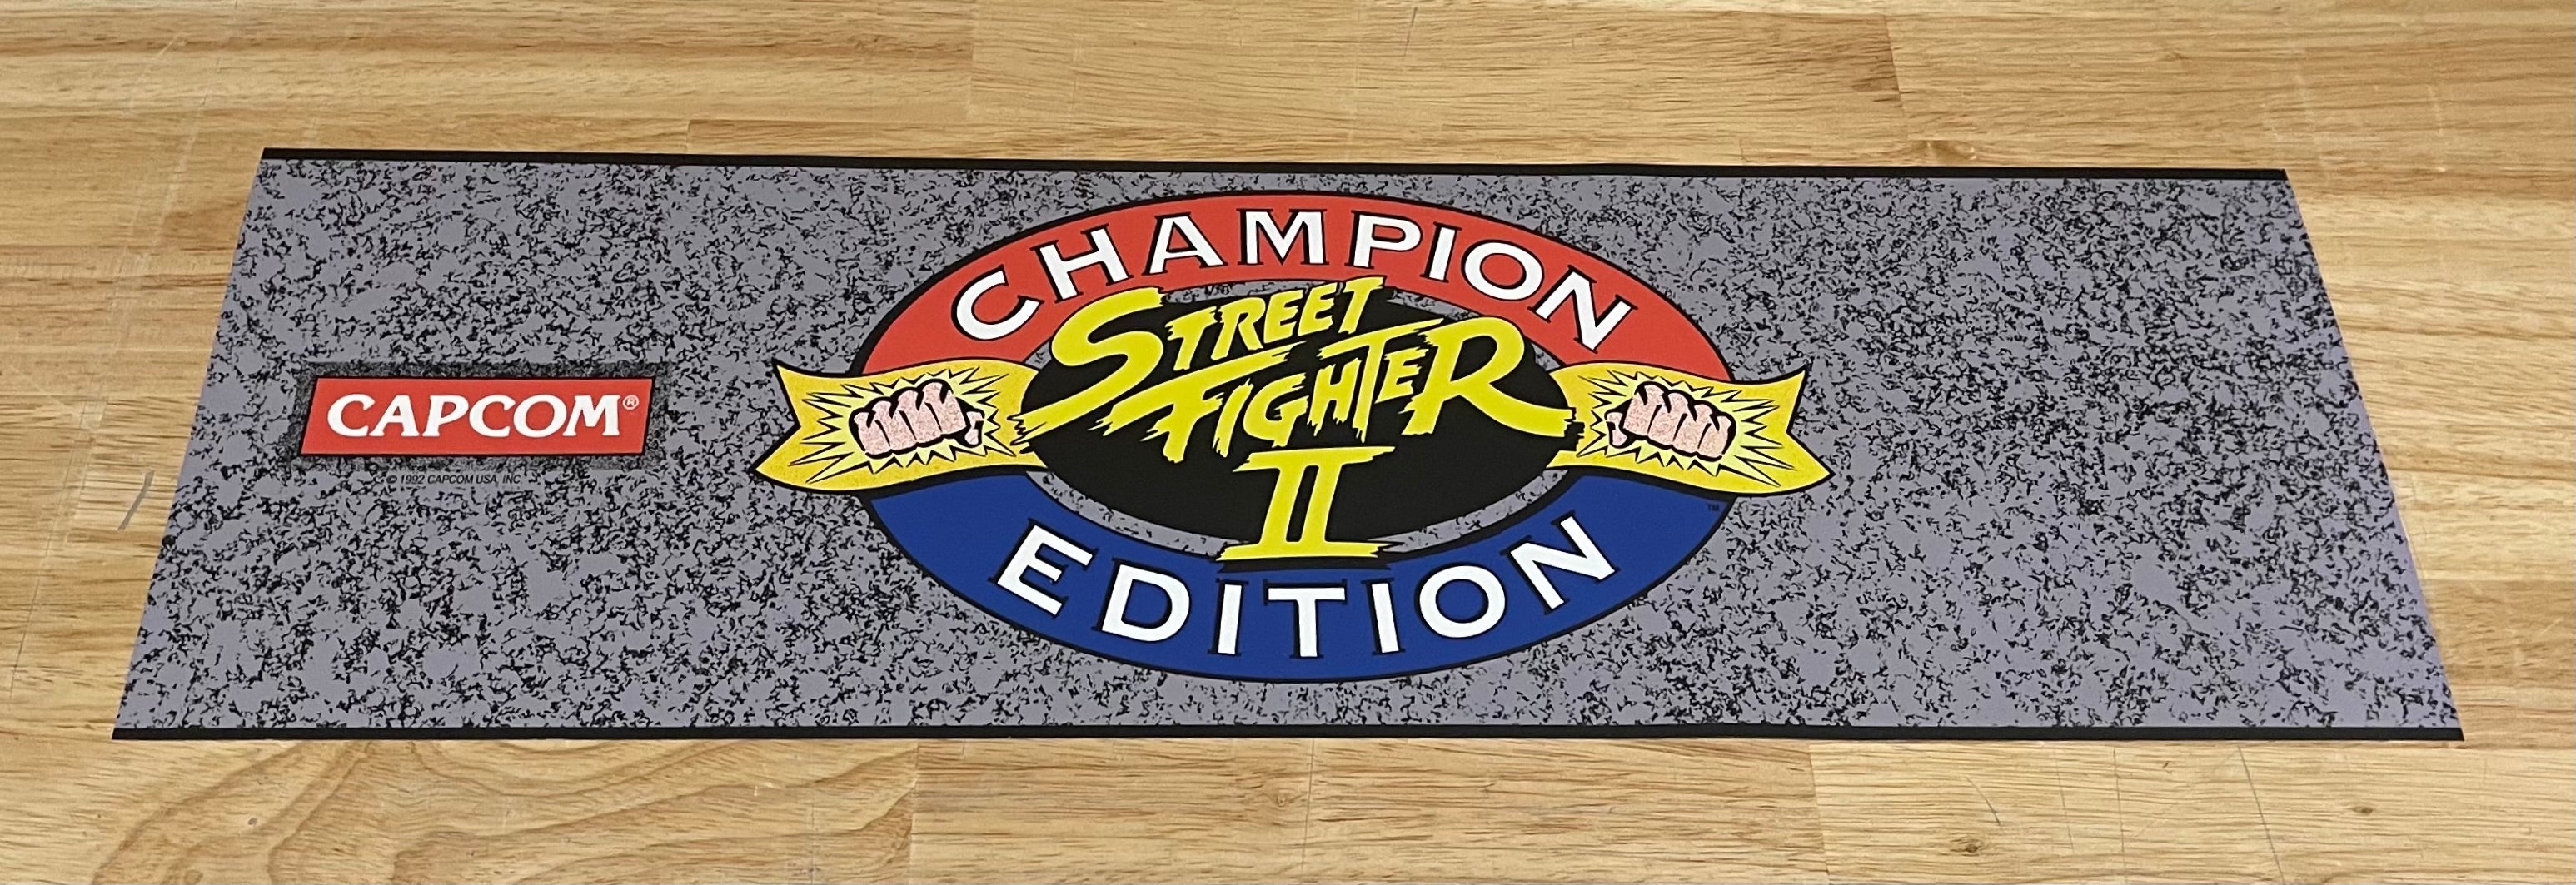 Chapiteau Street Fighter Champion Edition